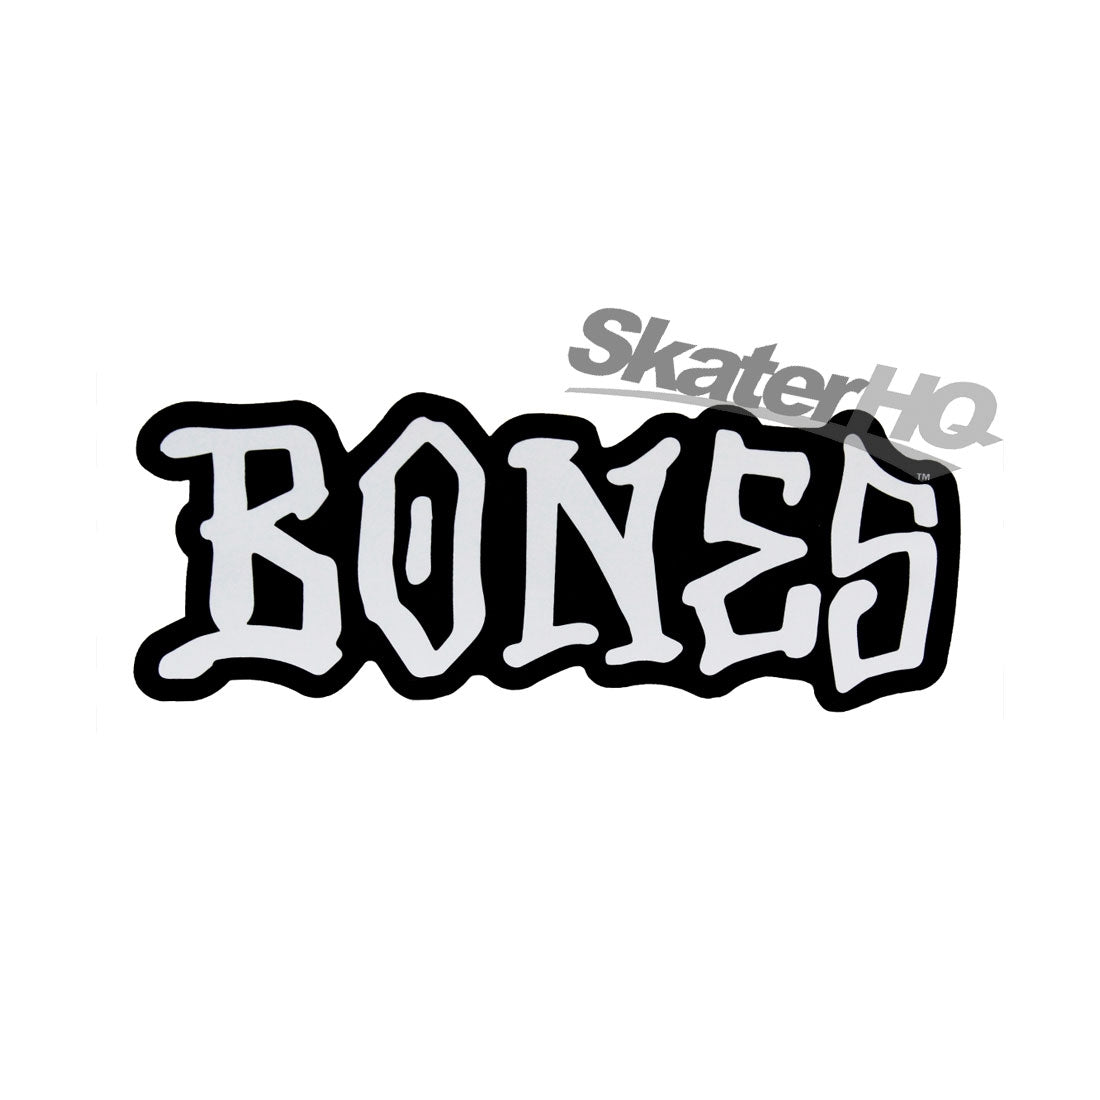 Bones Graffiti Sticker Medium - Black/White Text Stickers